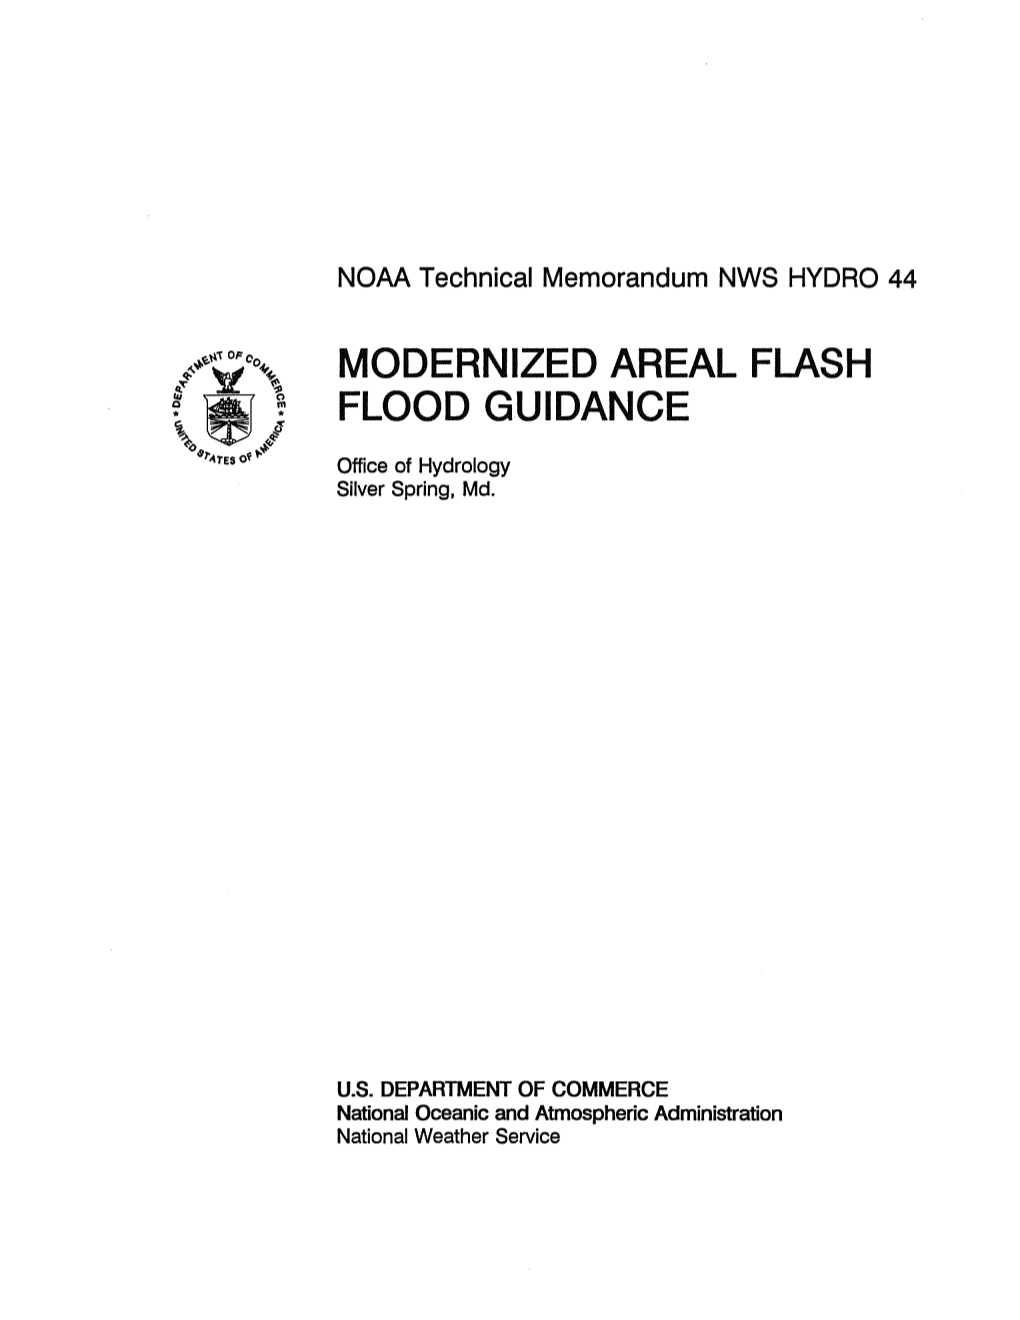 Modernized Areal Flash Flood Guidance